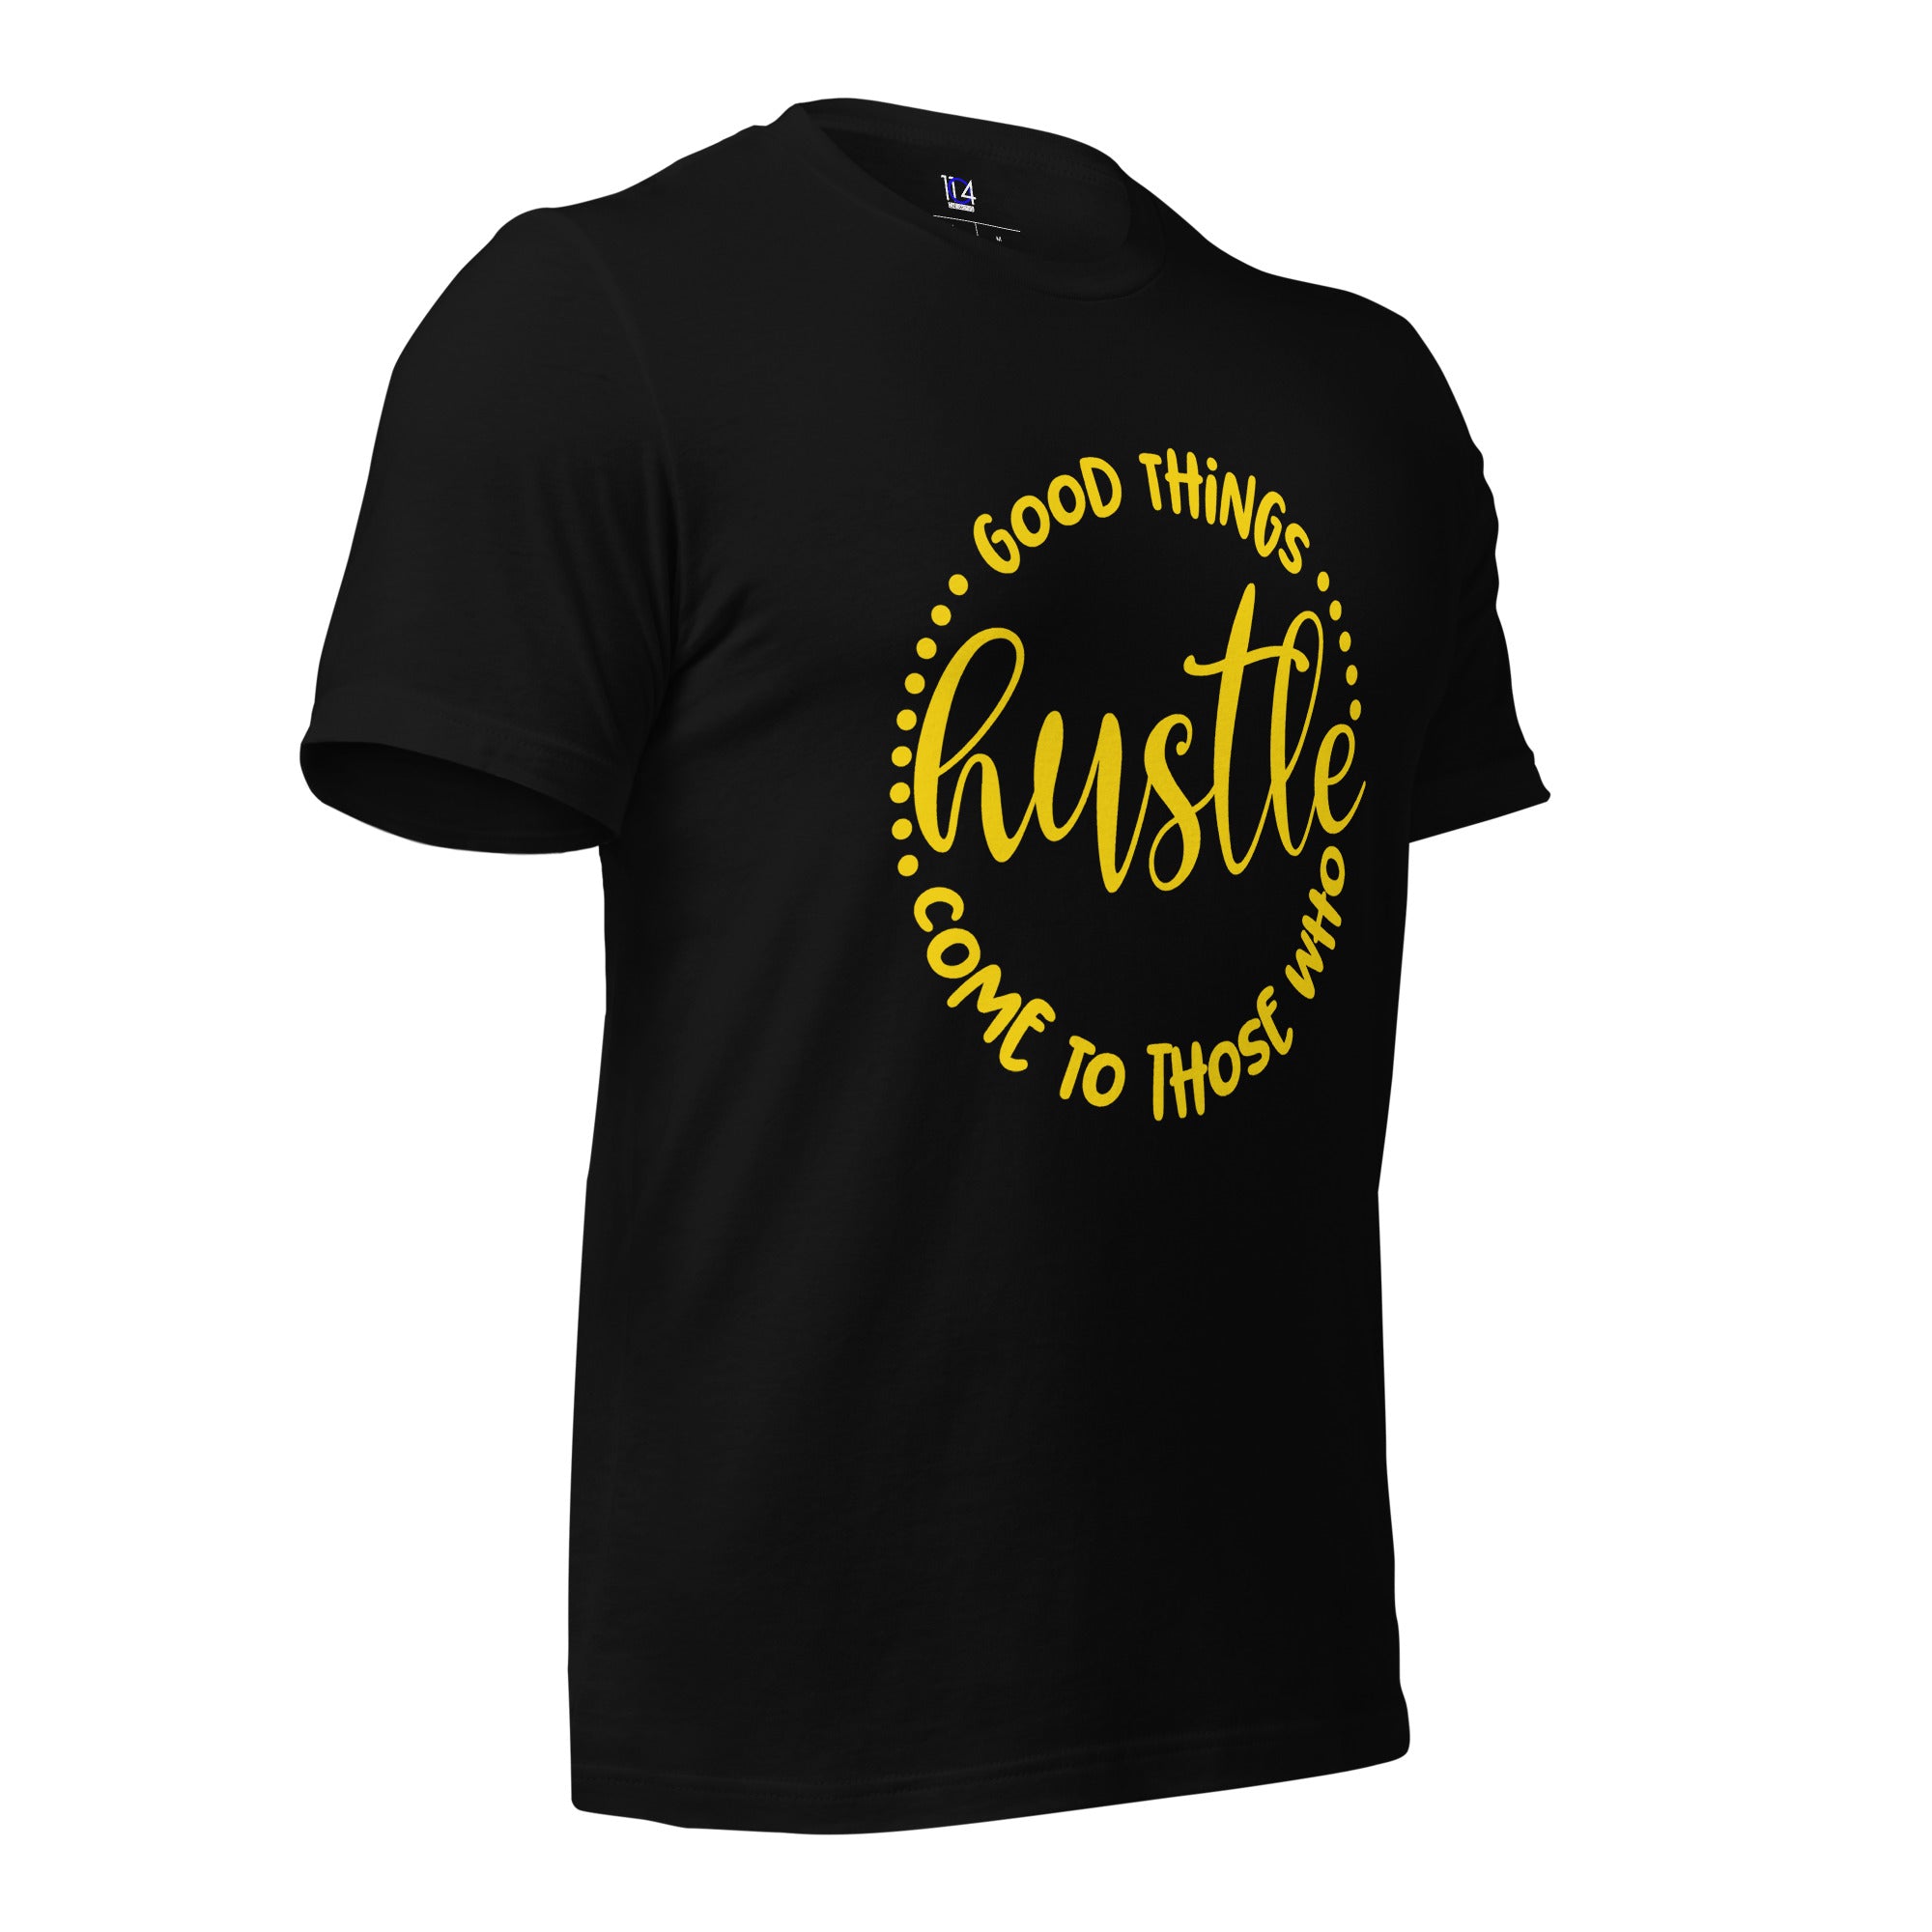 360 Hustle - Short-Sleeve Unisex T-Shirt